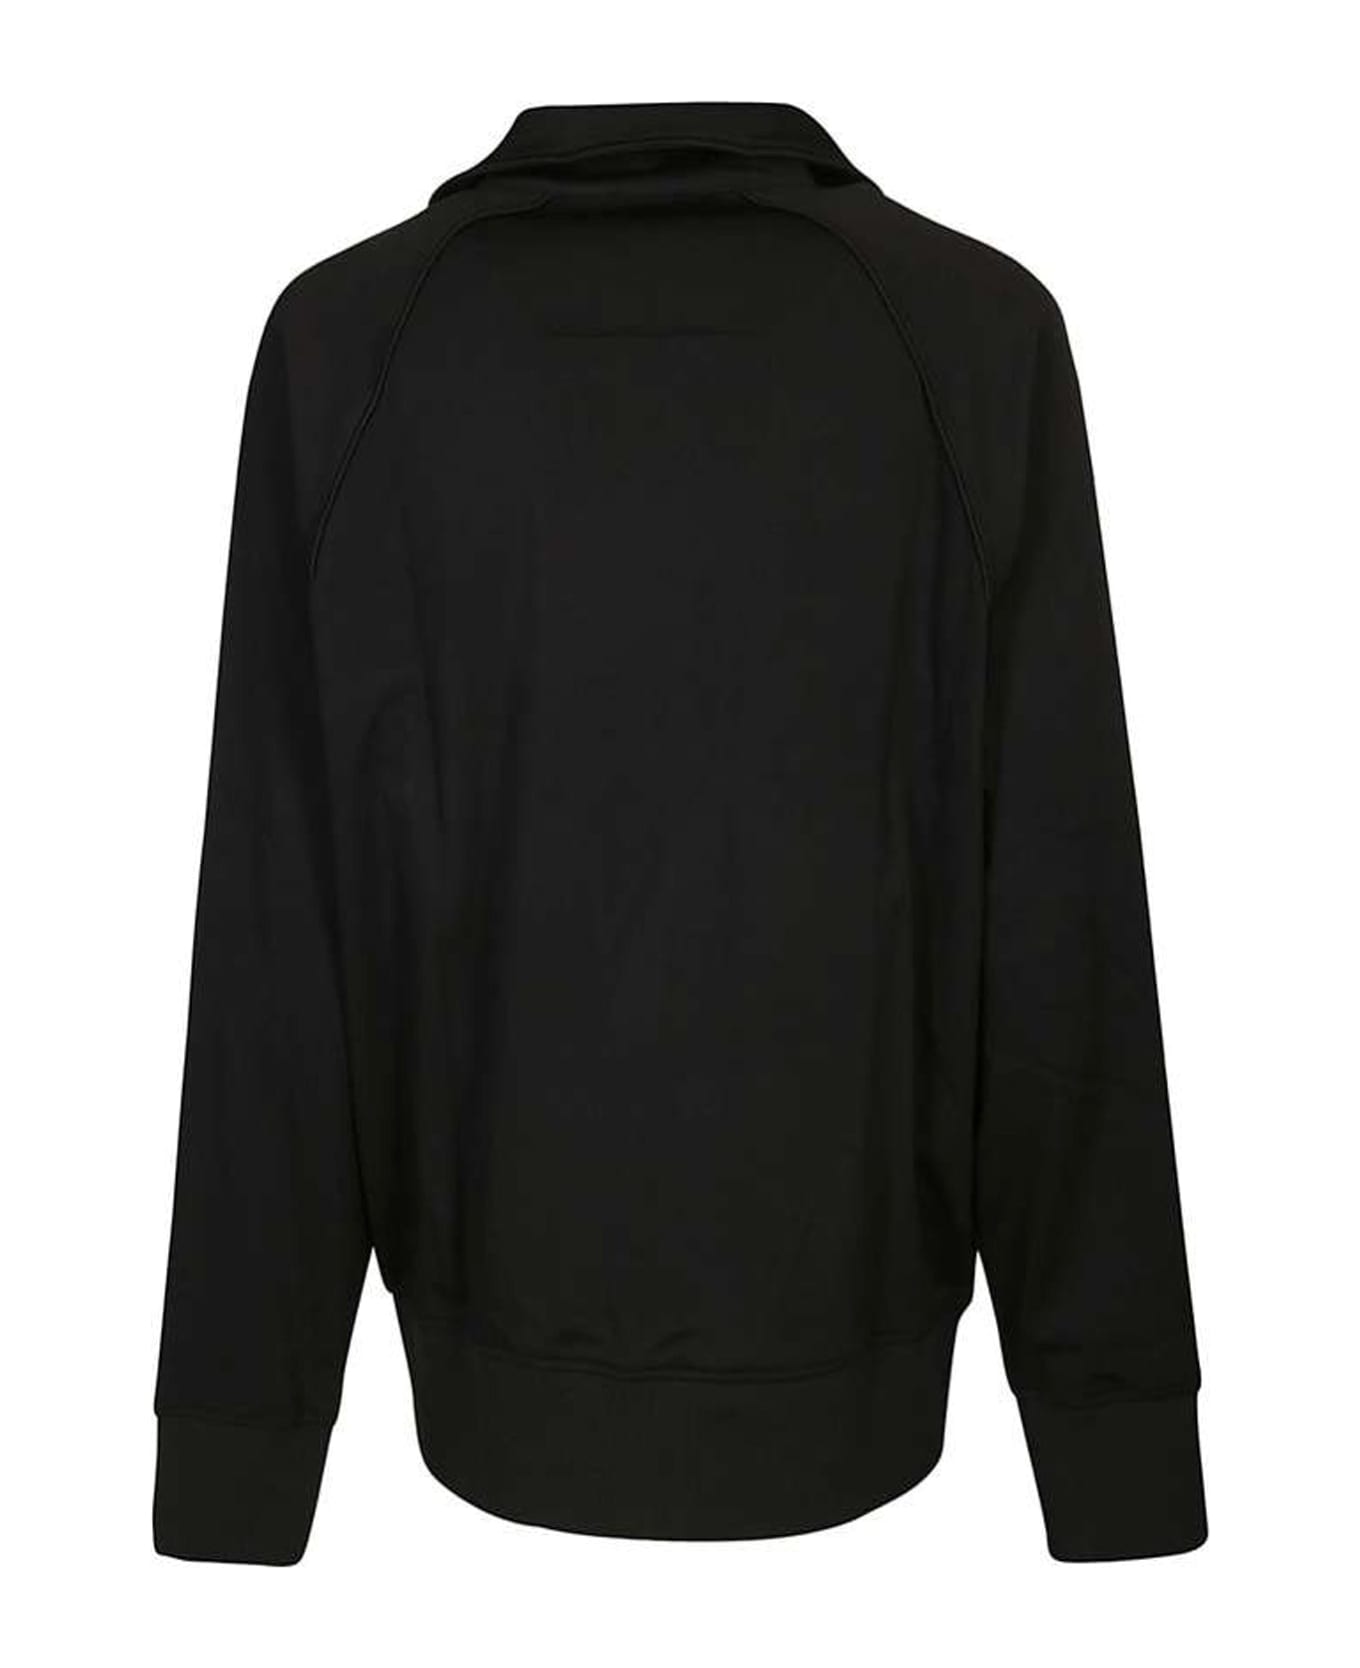 Givenchy Logo Zipped Sweatshirt - Black